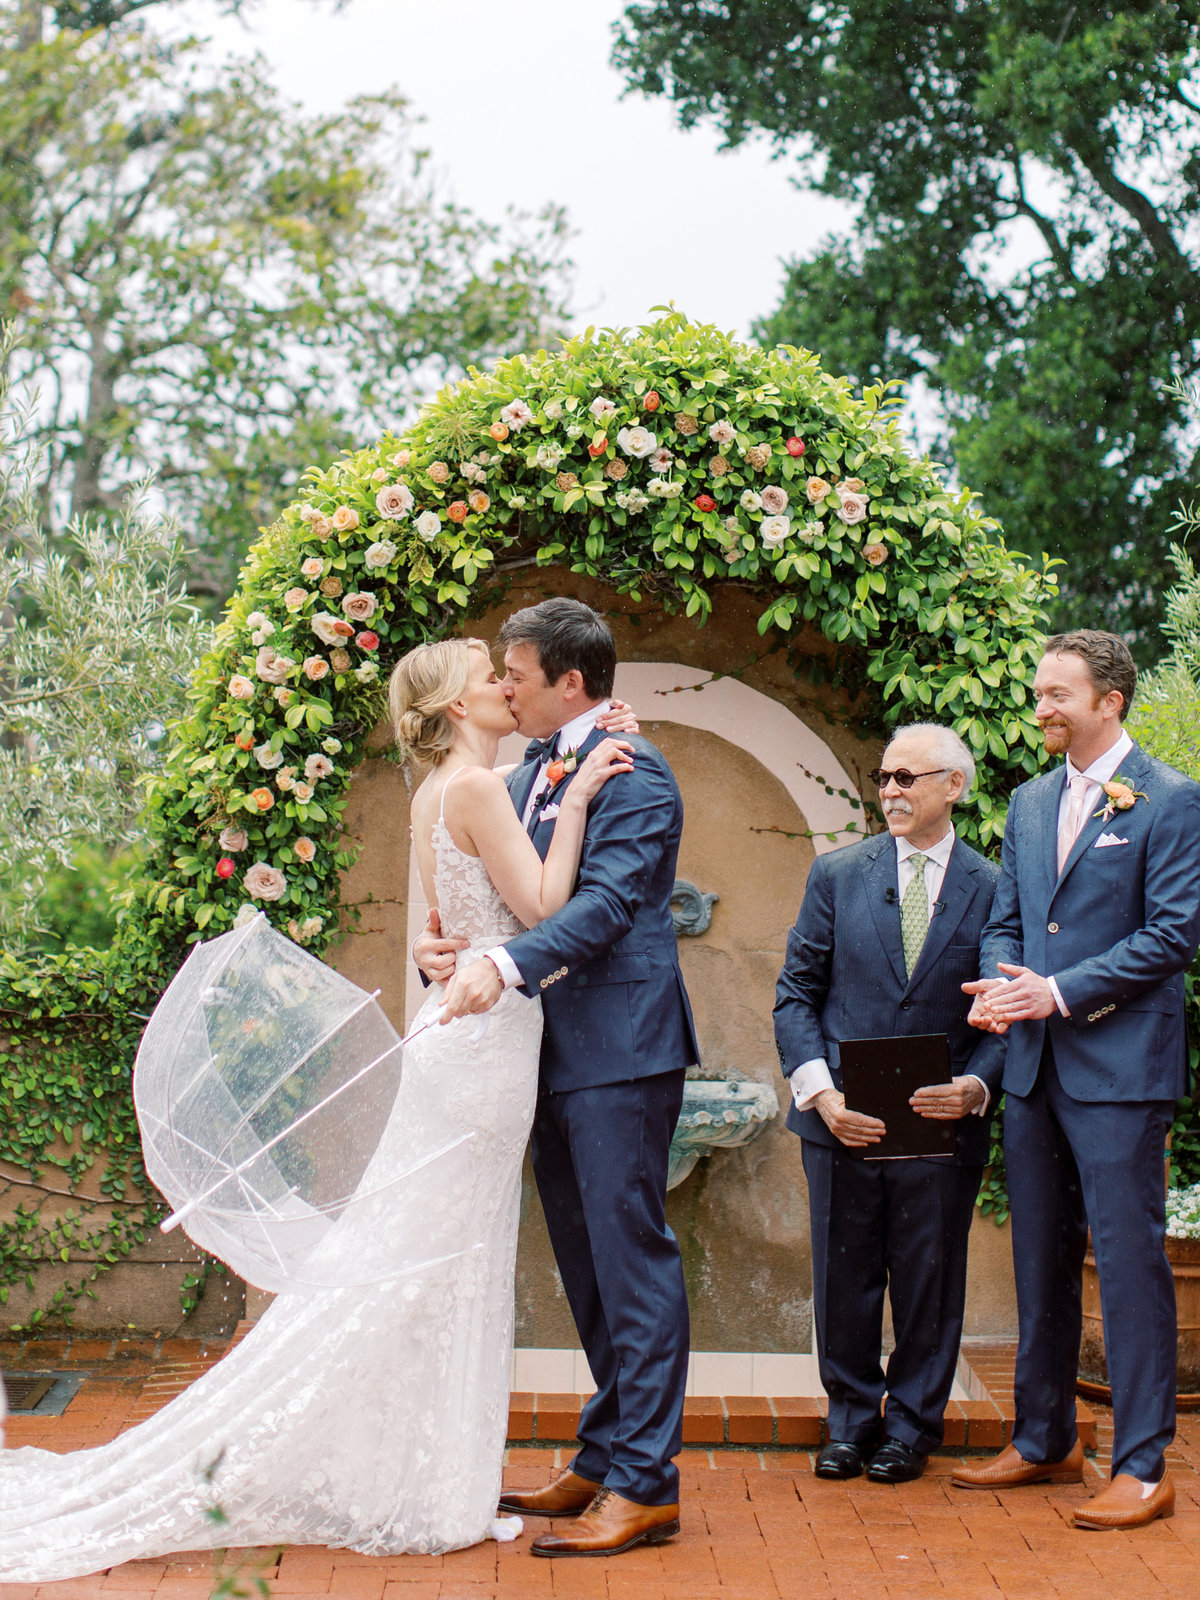 Ashley + Josh La Playa Carmel Wedding | Cassie Valente Photography 0439